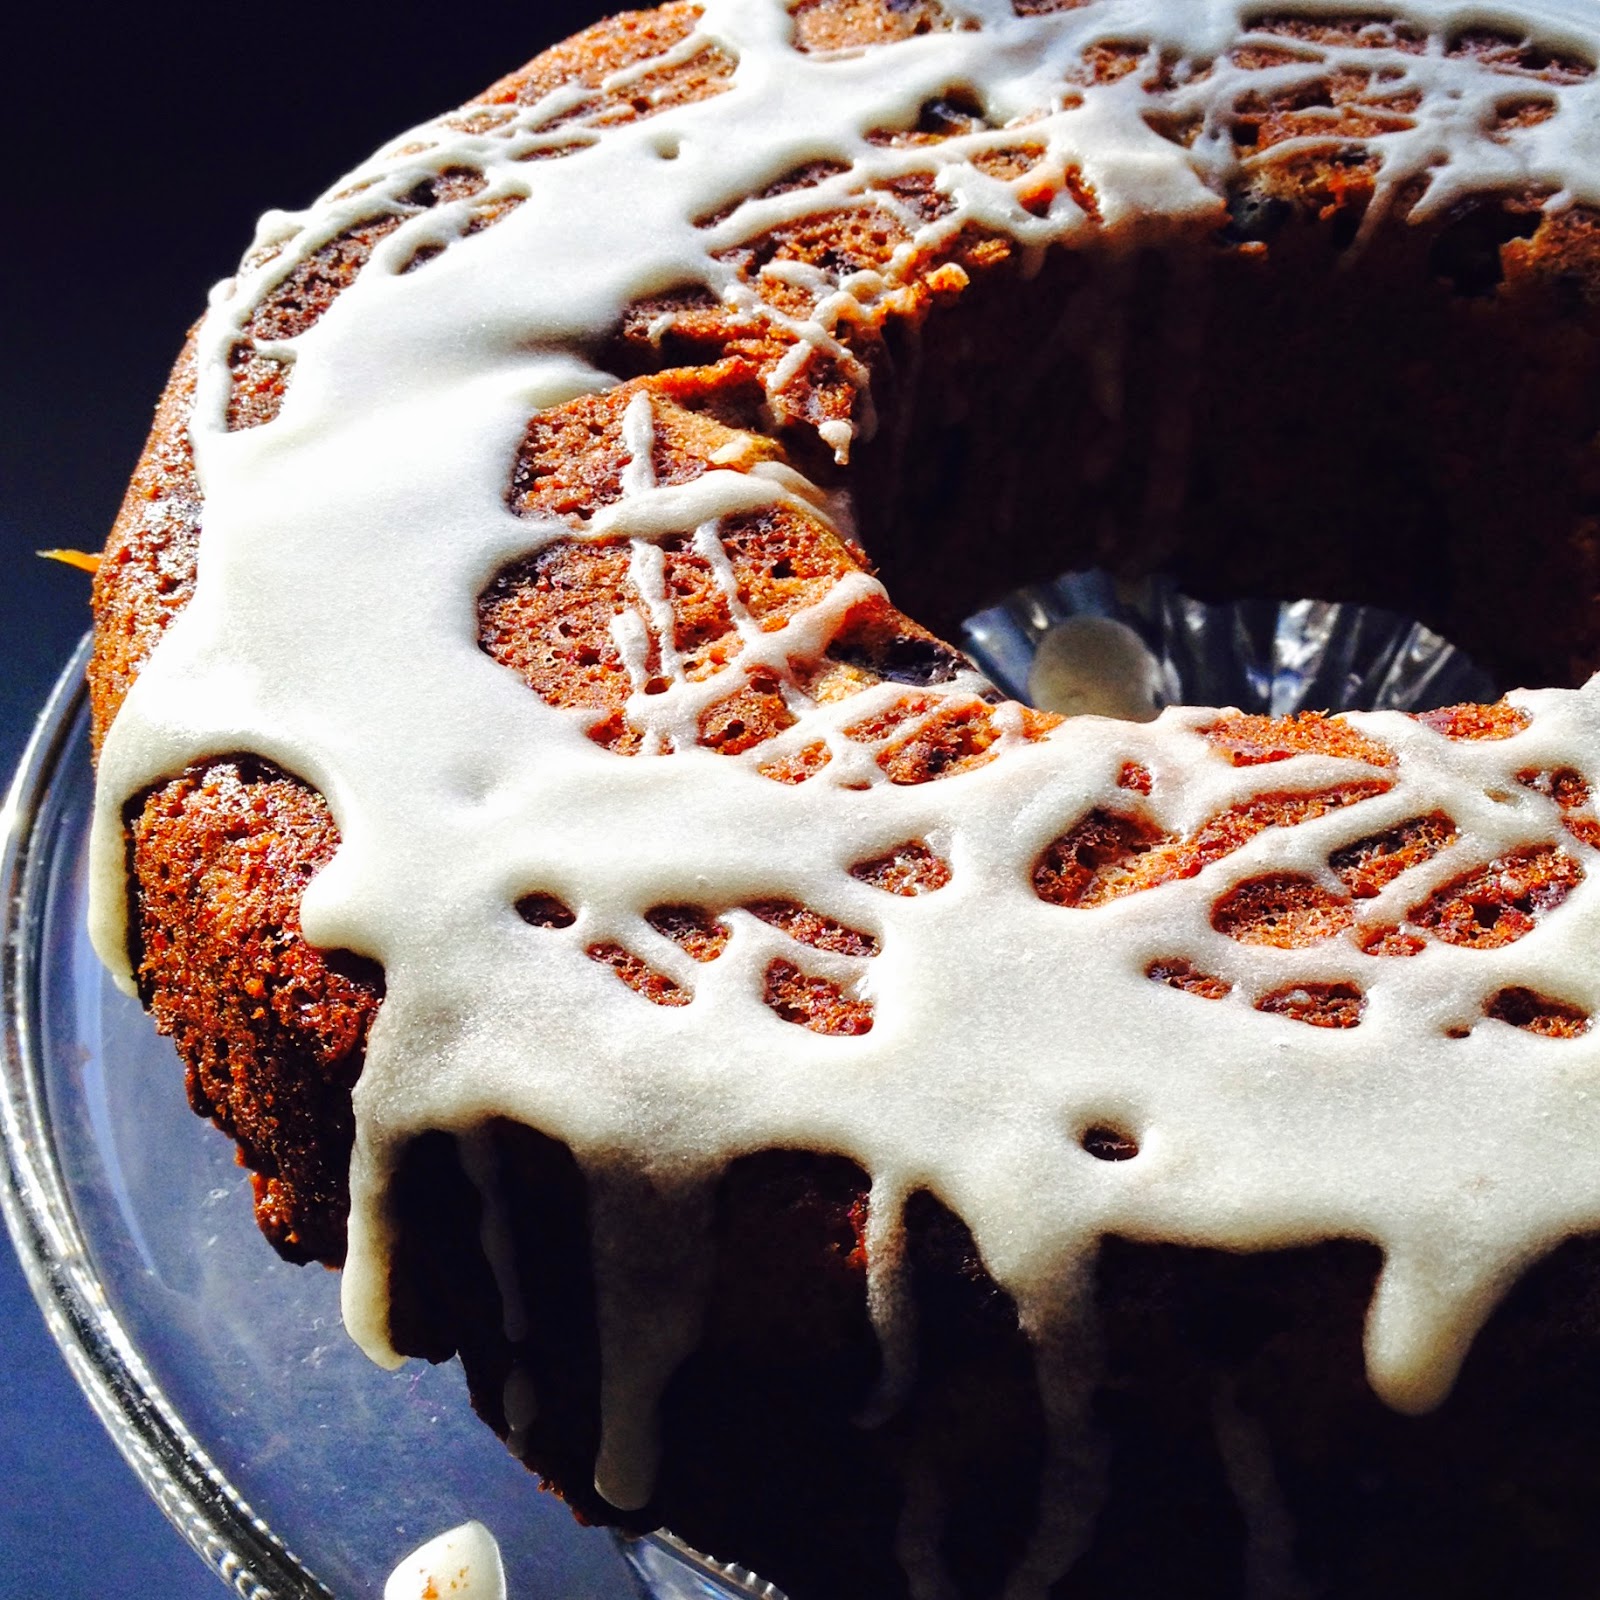 Coconut, chocolate and vanilla cake - The KitchenMaid